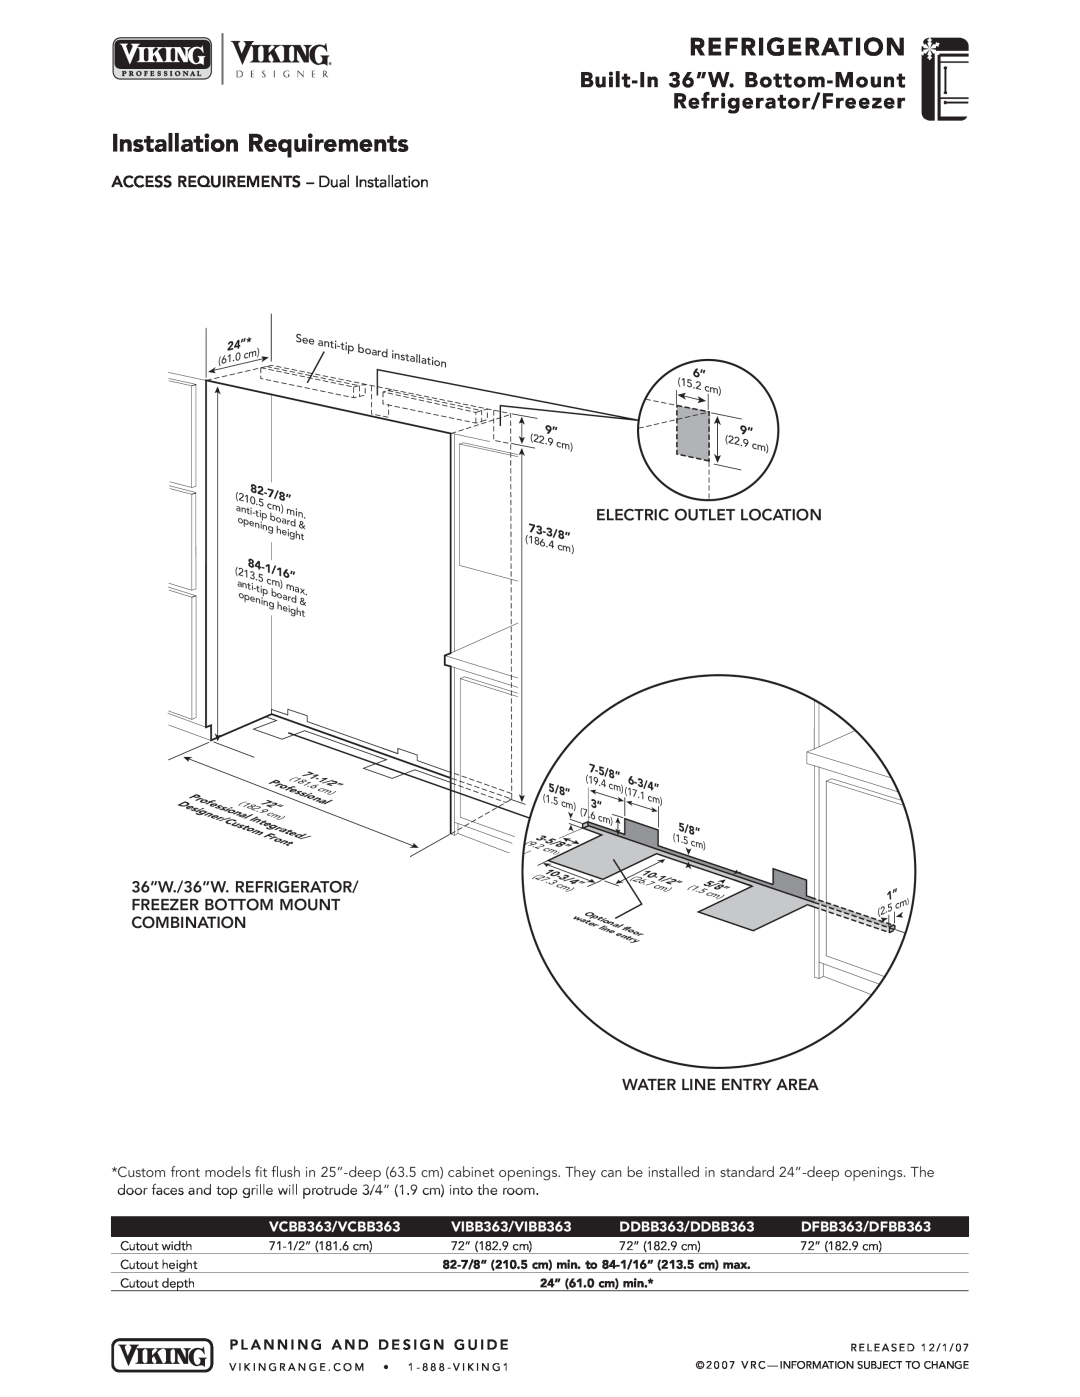 Viking DFBB363 Installation Requirements, Refrigeration, Built-In 36”W. Bottom-Mount Refrigerator/Freezer, 7/8”, 5/8” 